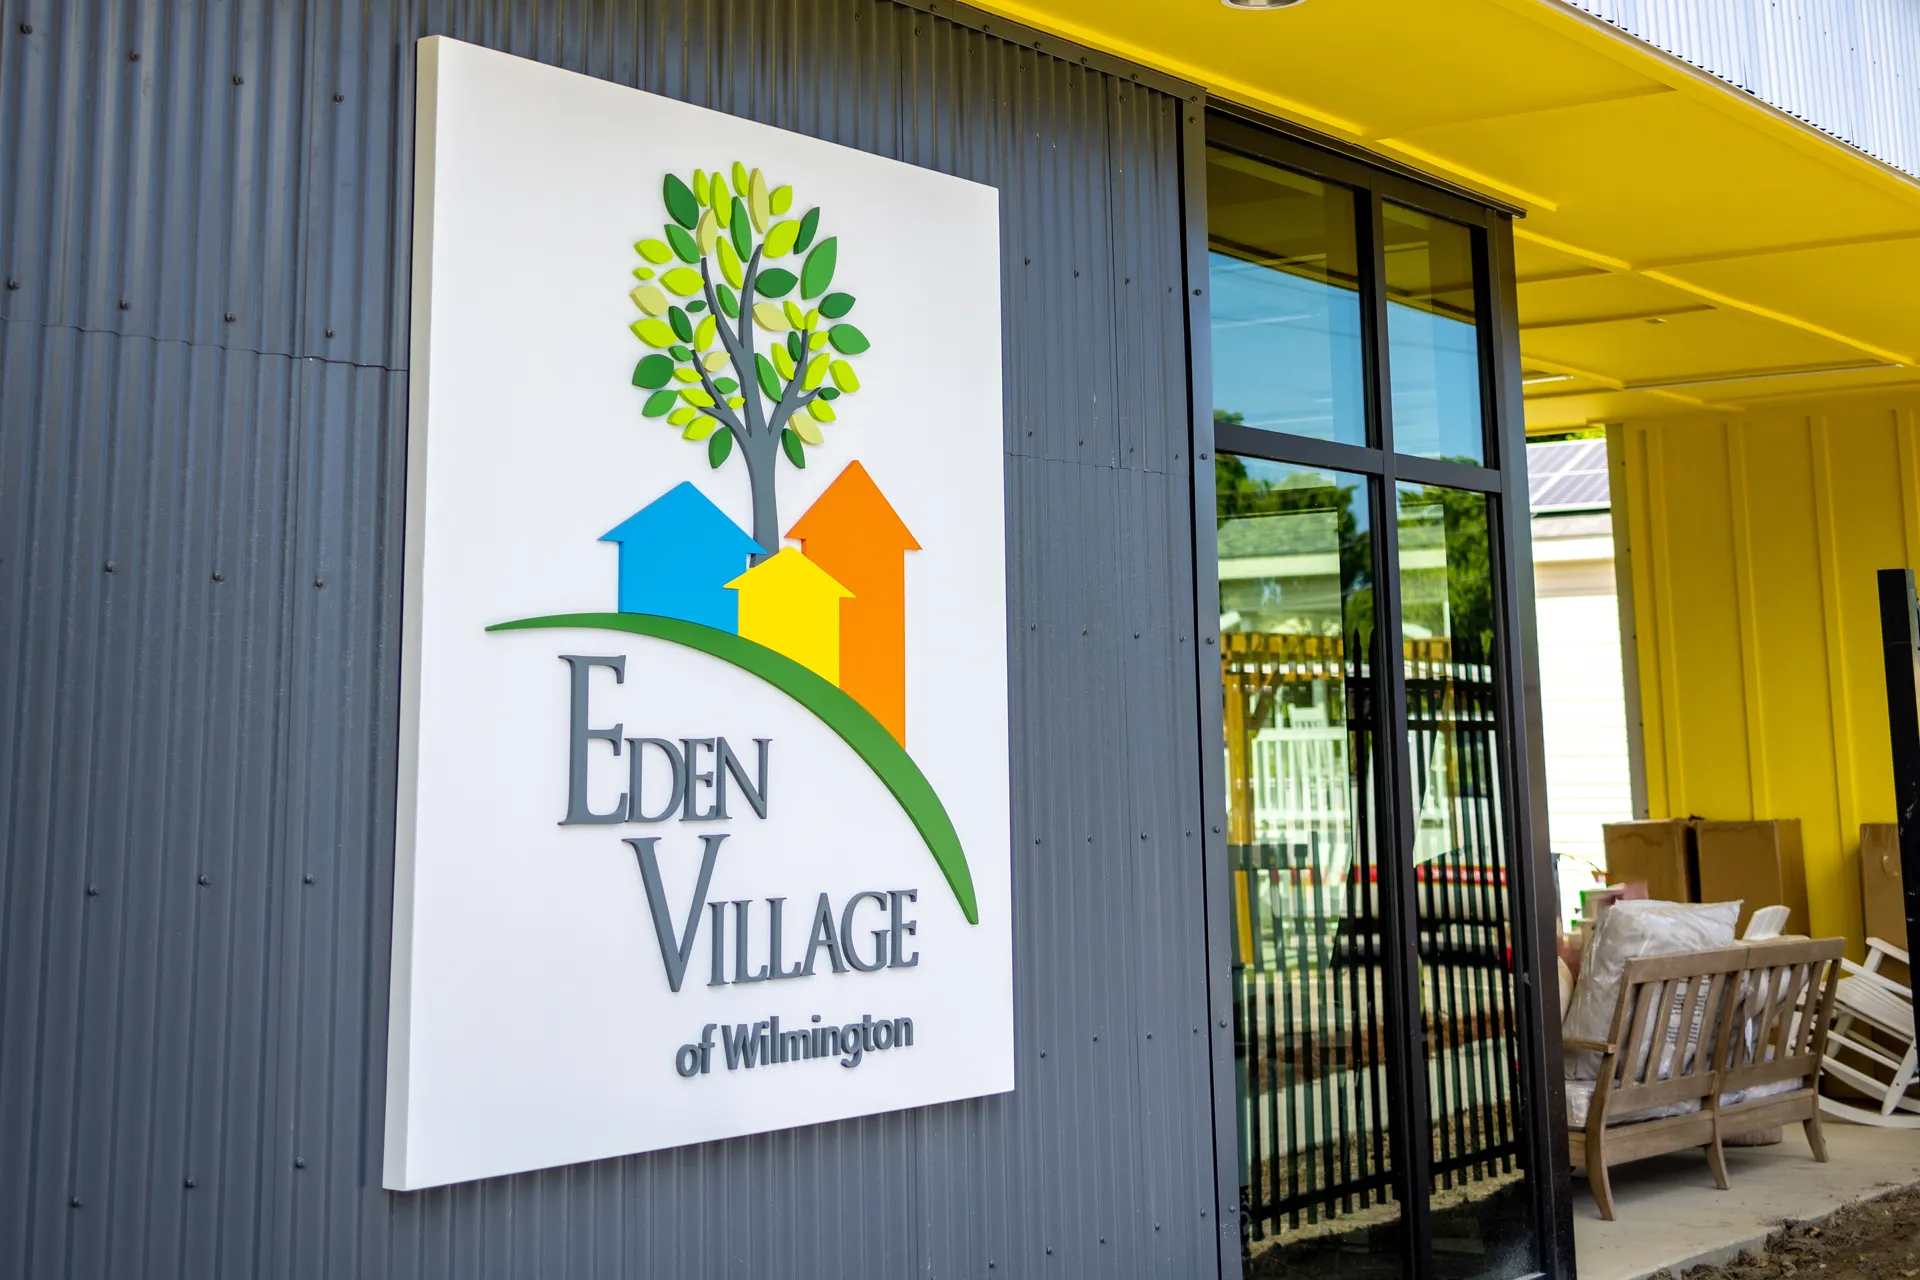 Eden Village of Wilmington Community Center